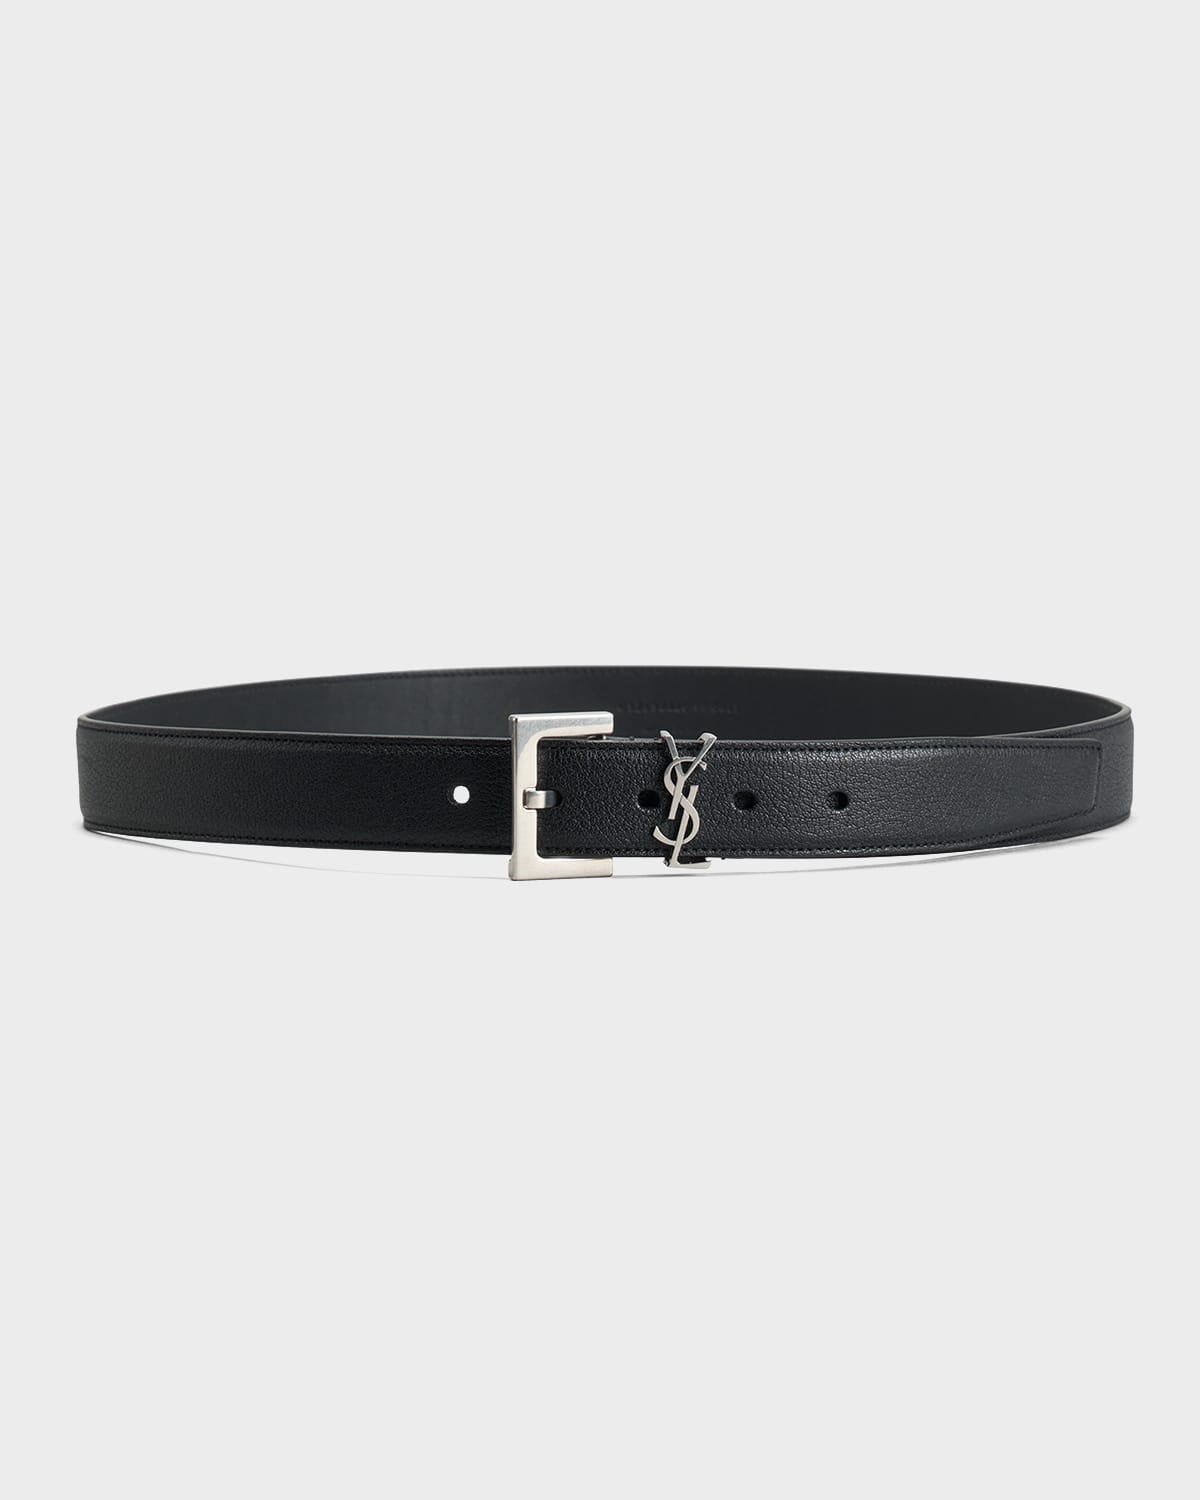 YSL Cintura Box Leather Belt